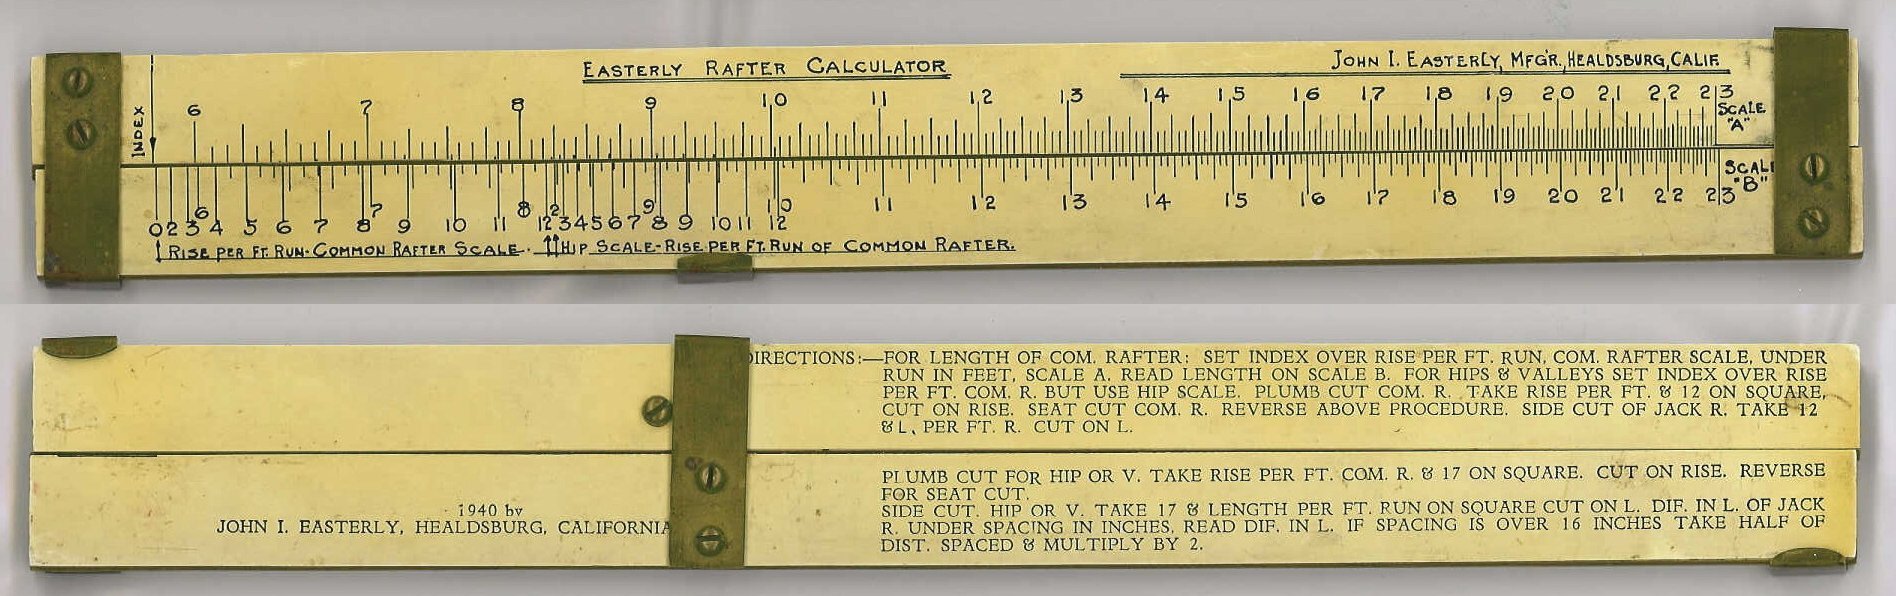 Crushed Stone Calculator Slide Ruler Made In USA!!! 